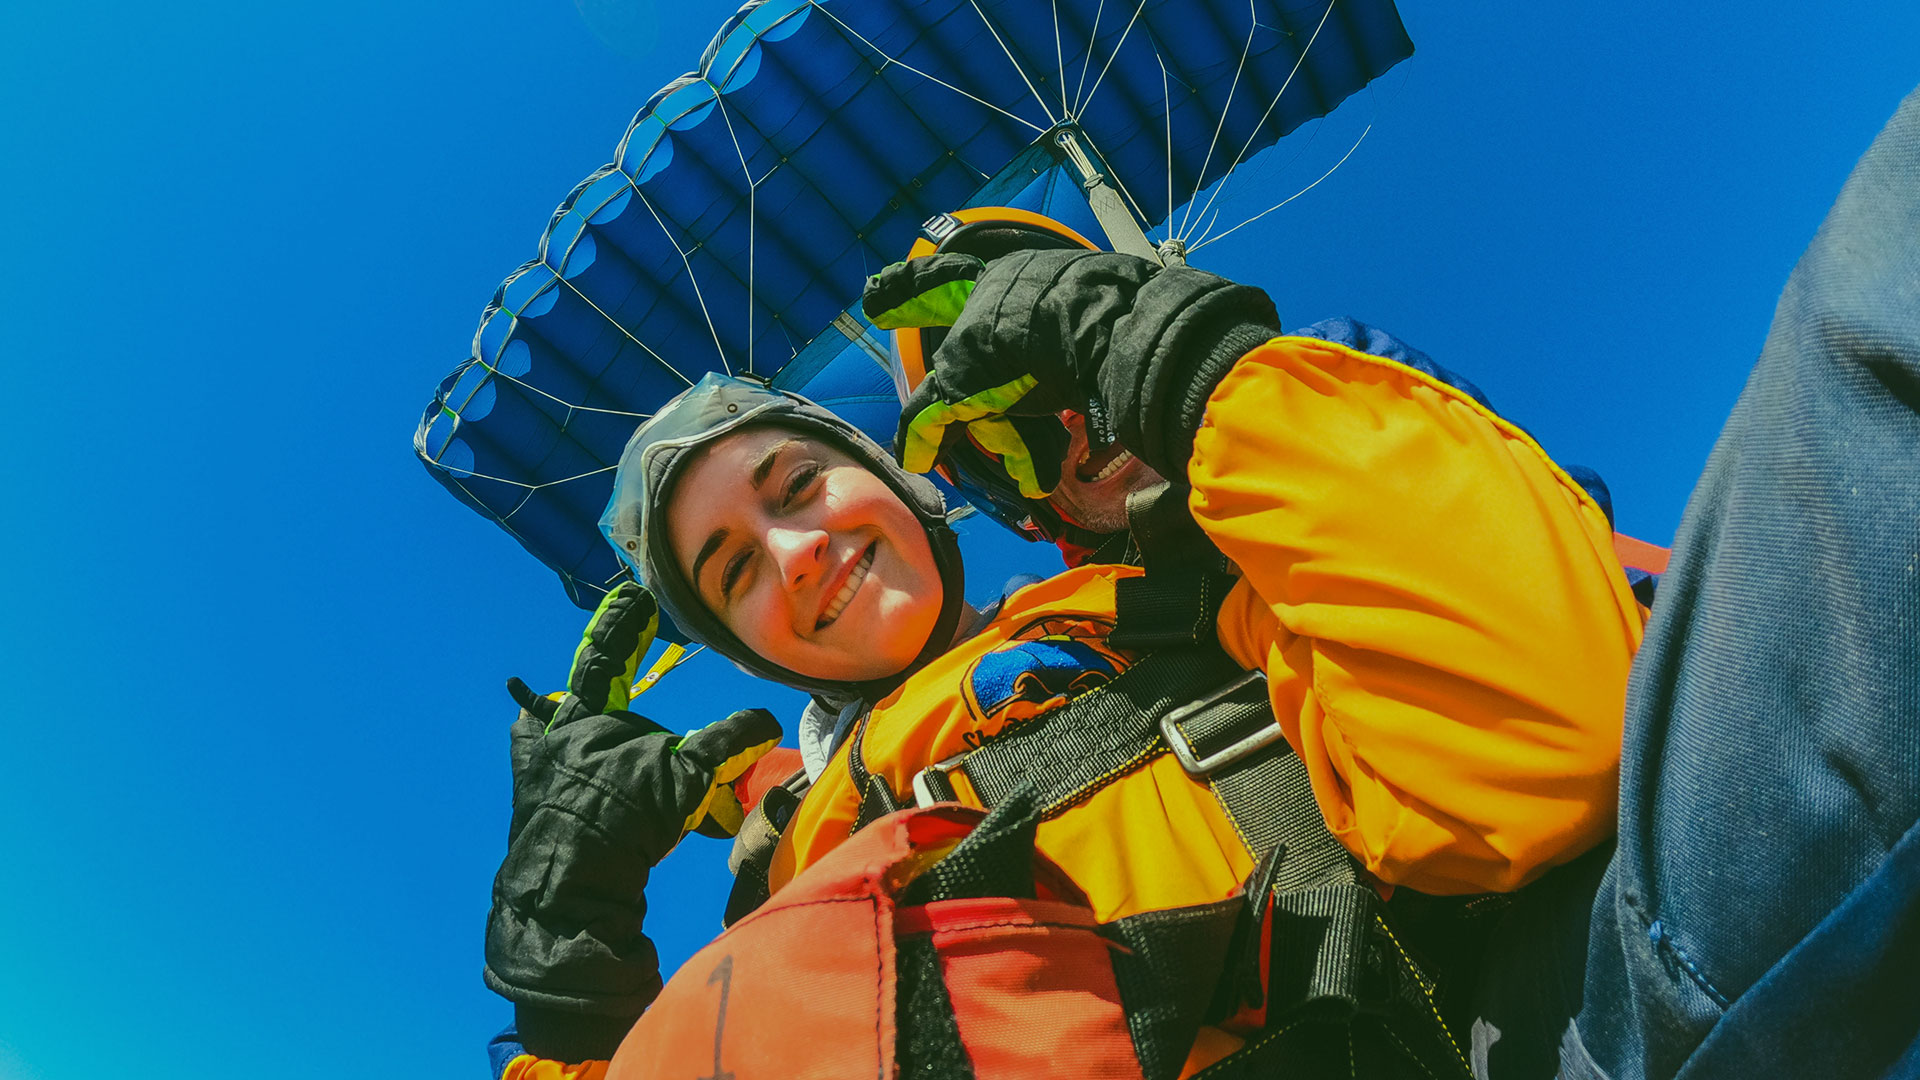 New Zealand Tandem Skydive fun